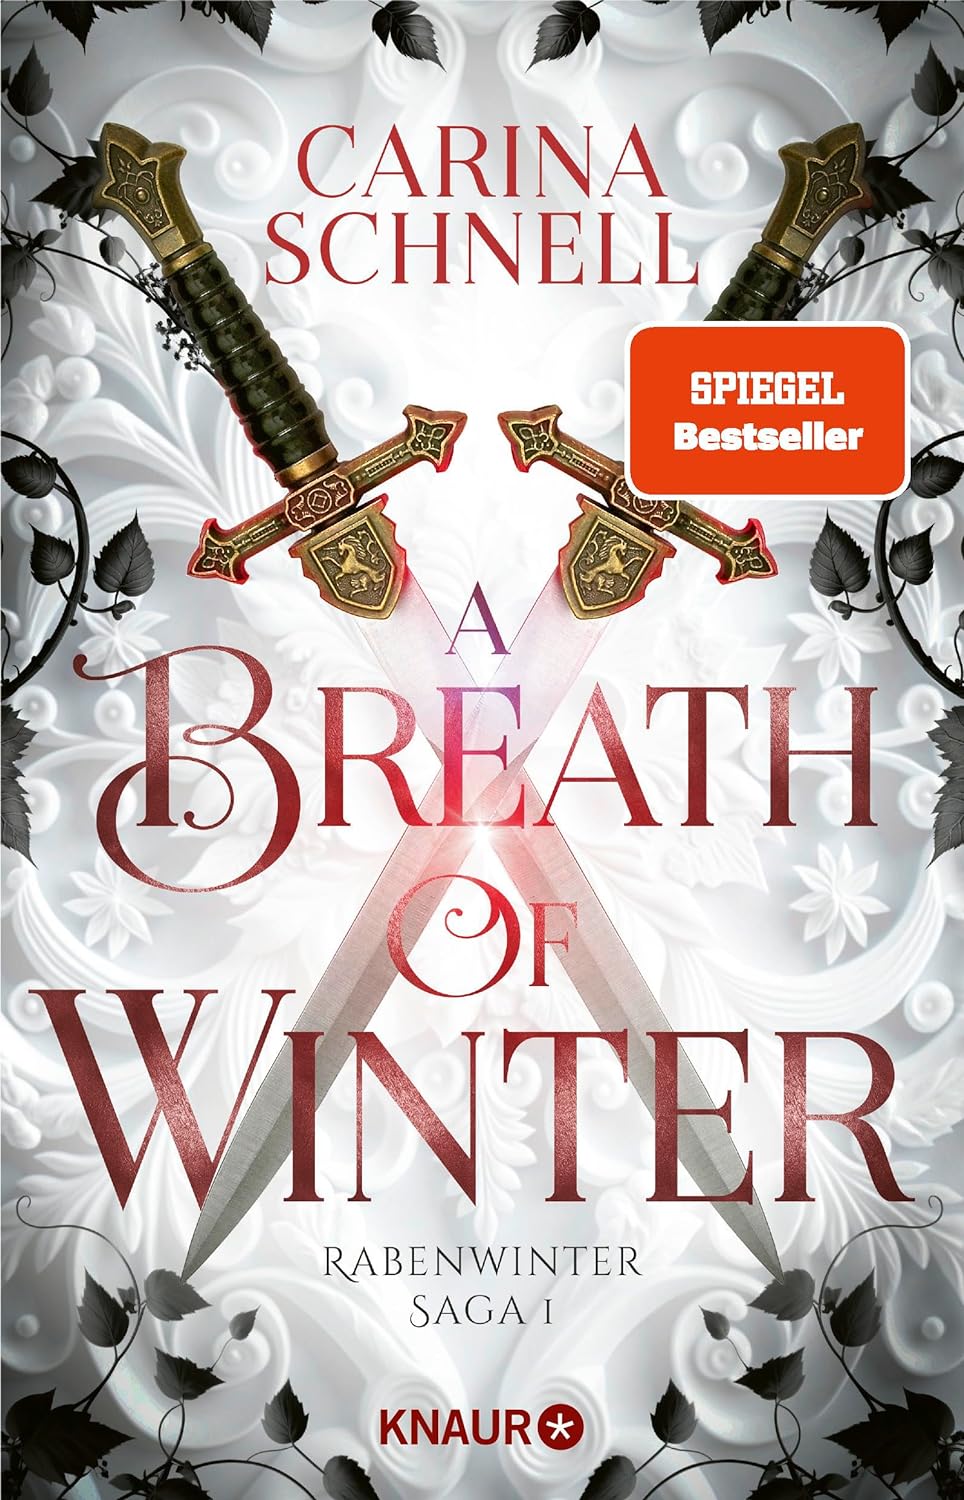 Rabenwinter Saga 1 - A Breath of Winter